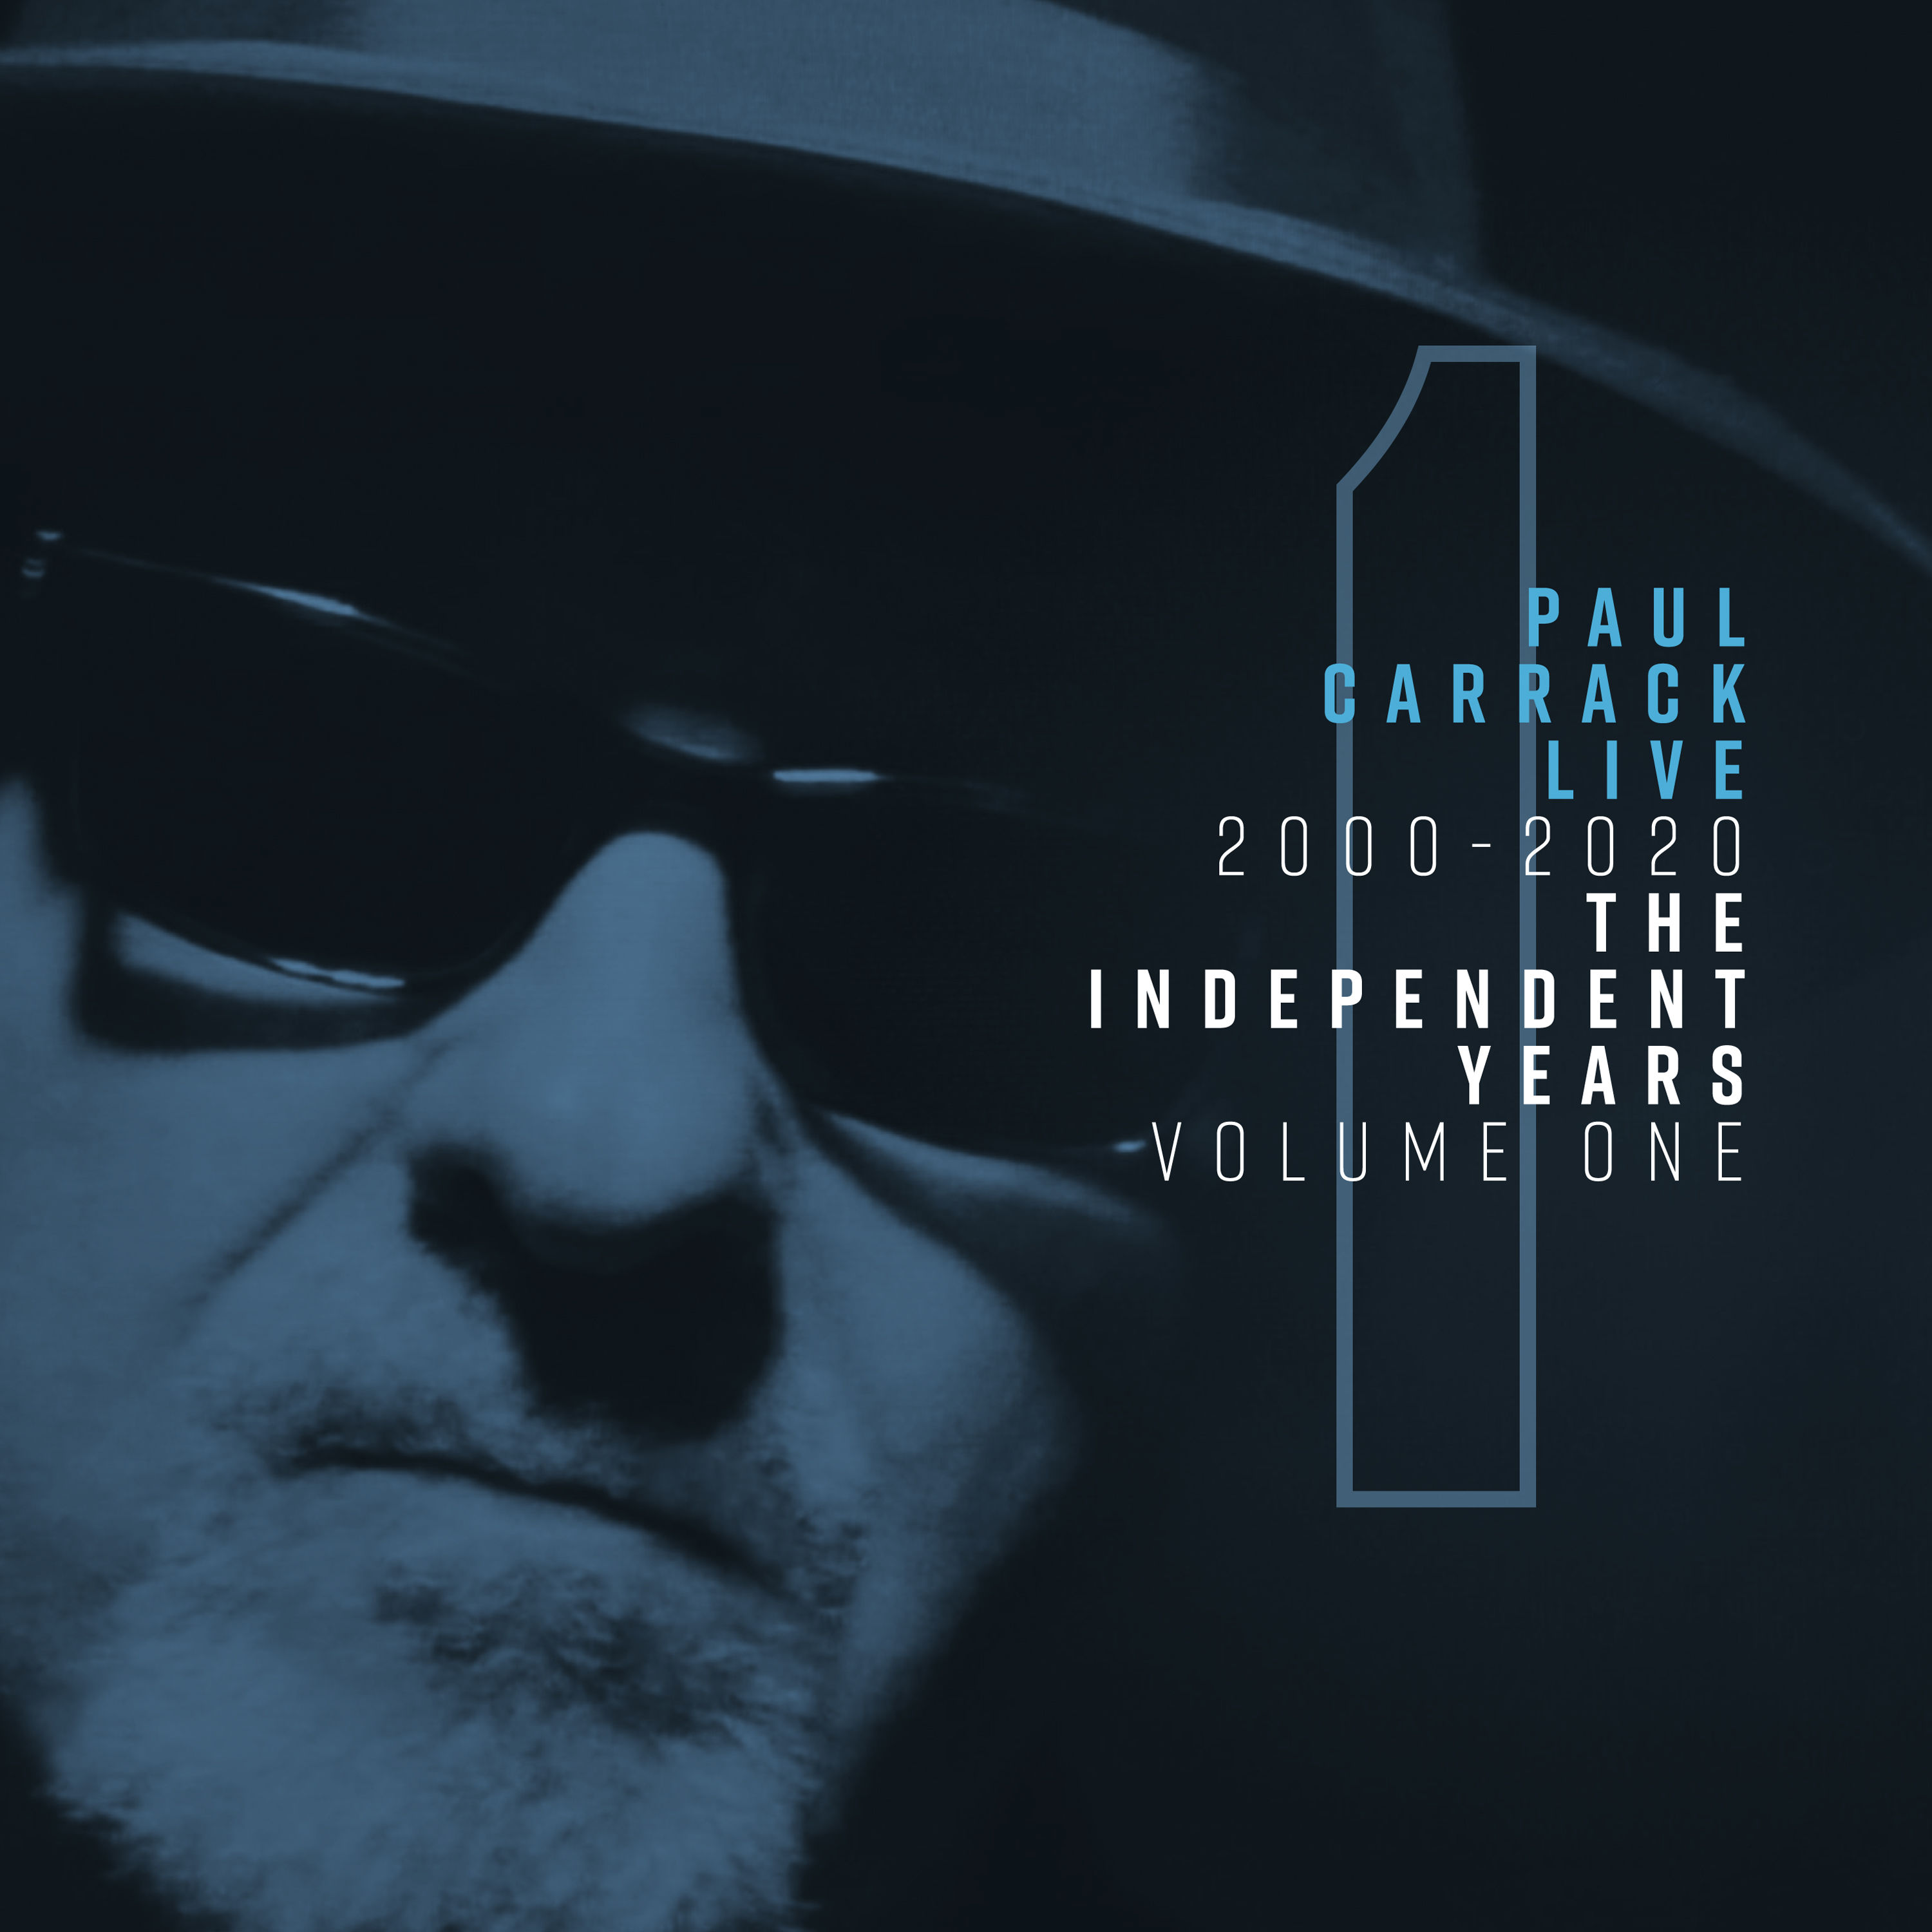 Paul Carrack - Paul Carrack Live: The Independent Years, Vol. 1 (2000-2020) (2020) [FLAC 24bit/44,1kHz]